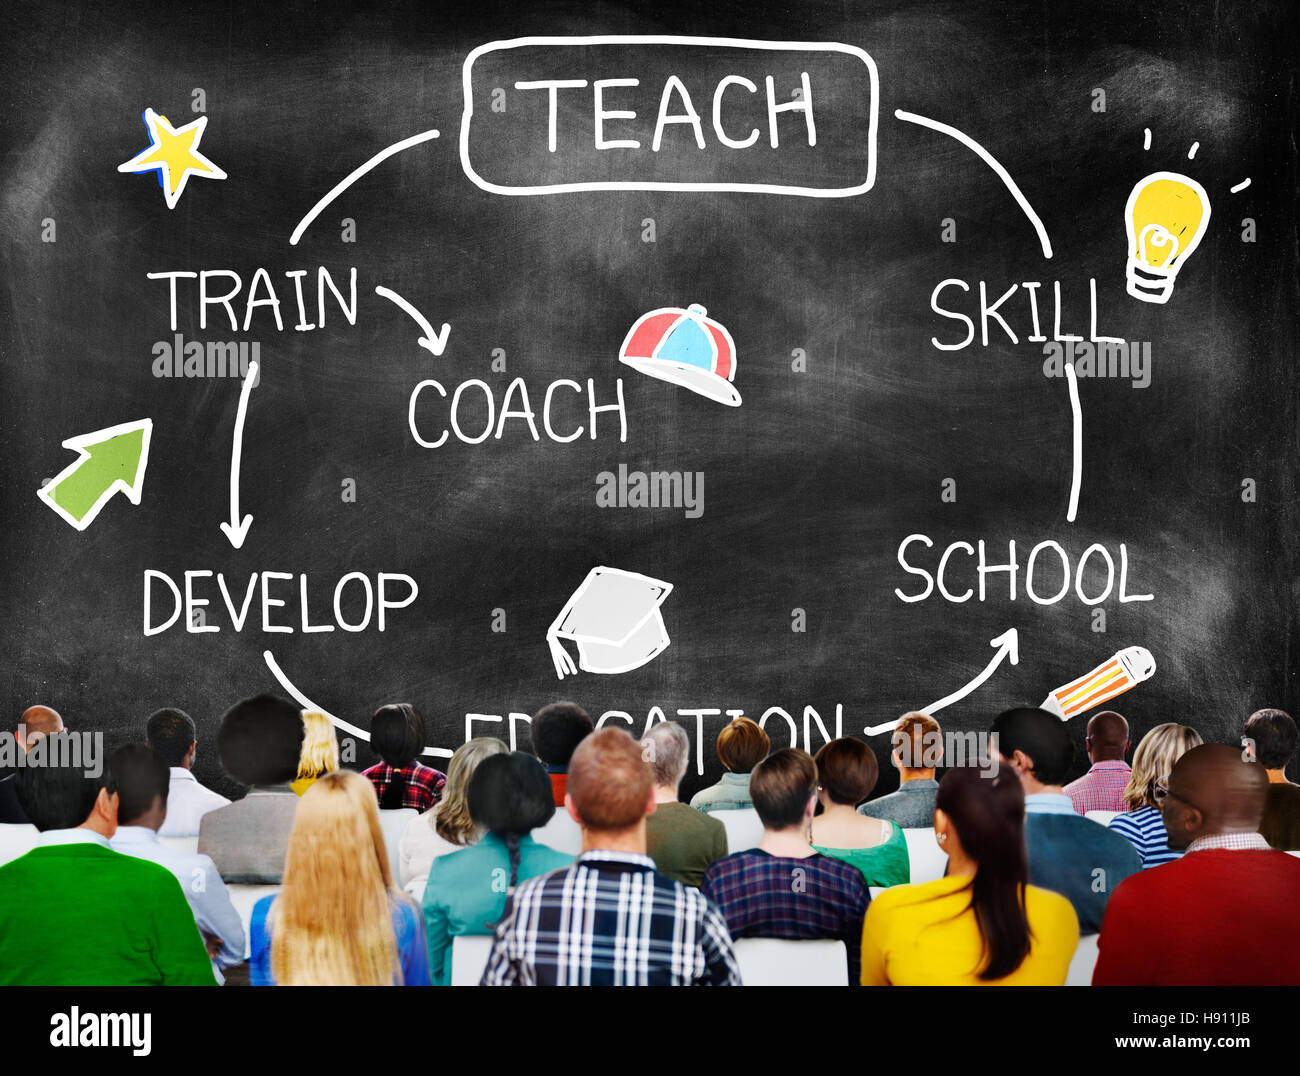 Teach Skill Education Coach Training Concept Stock Photo